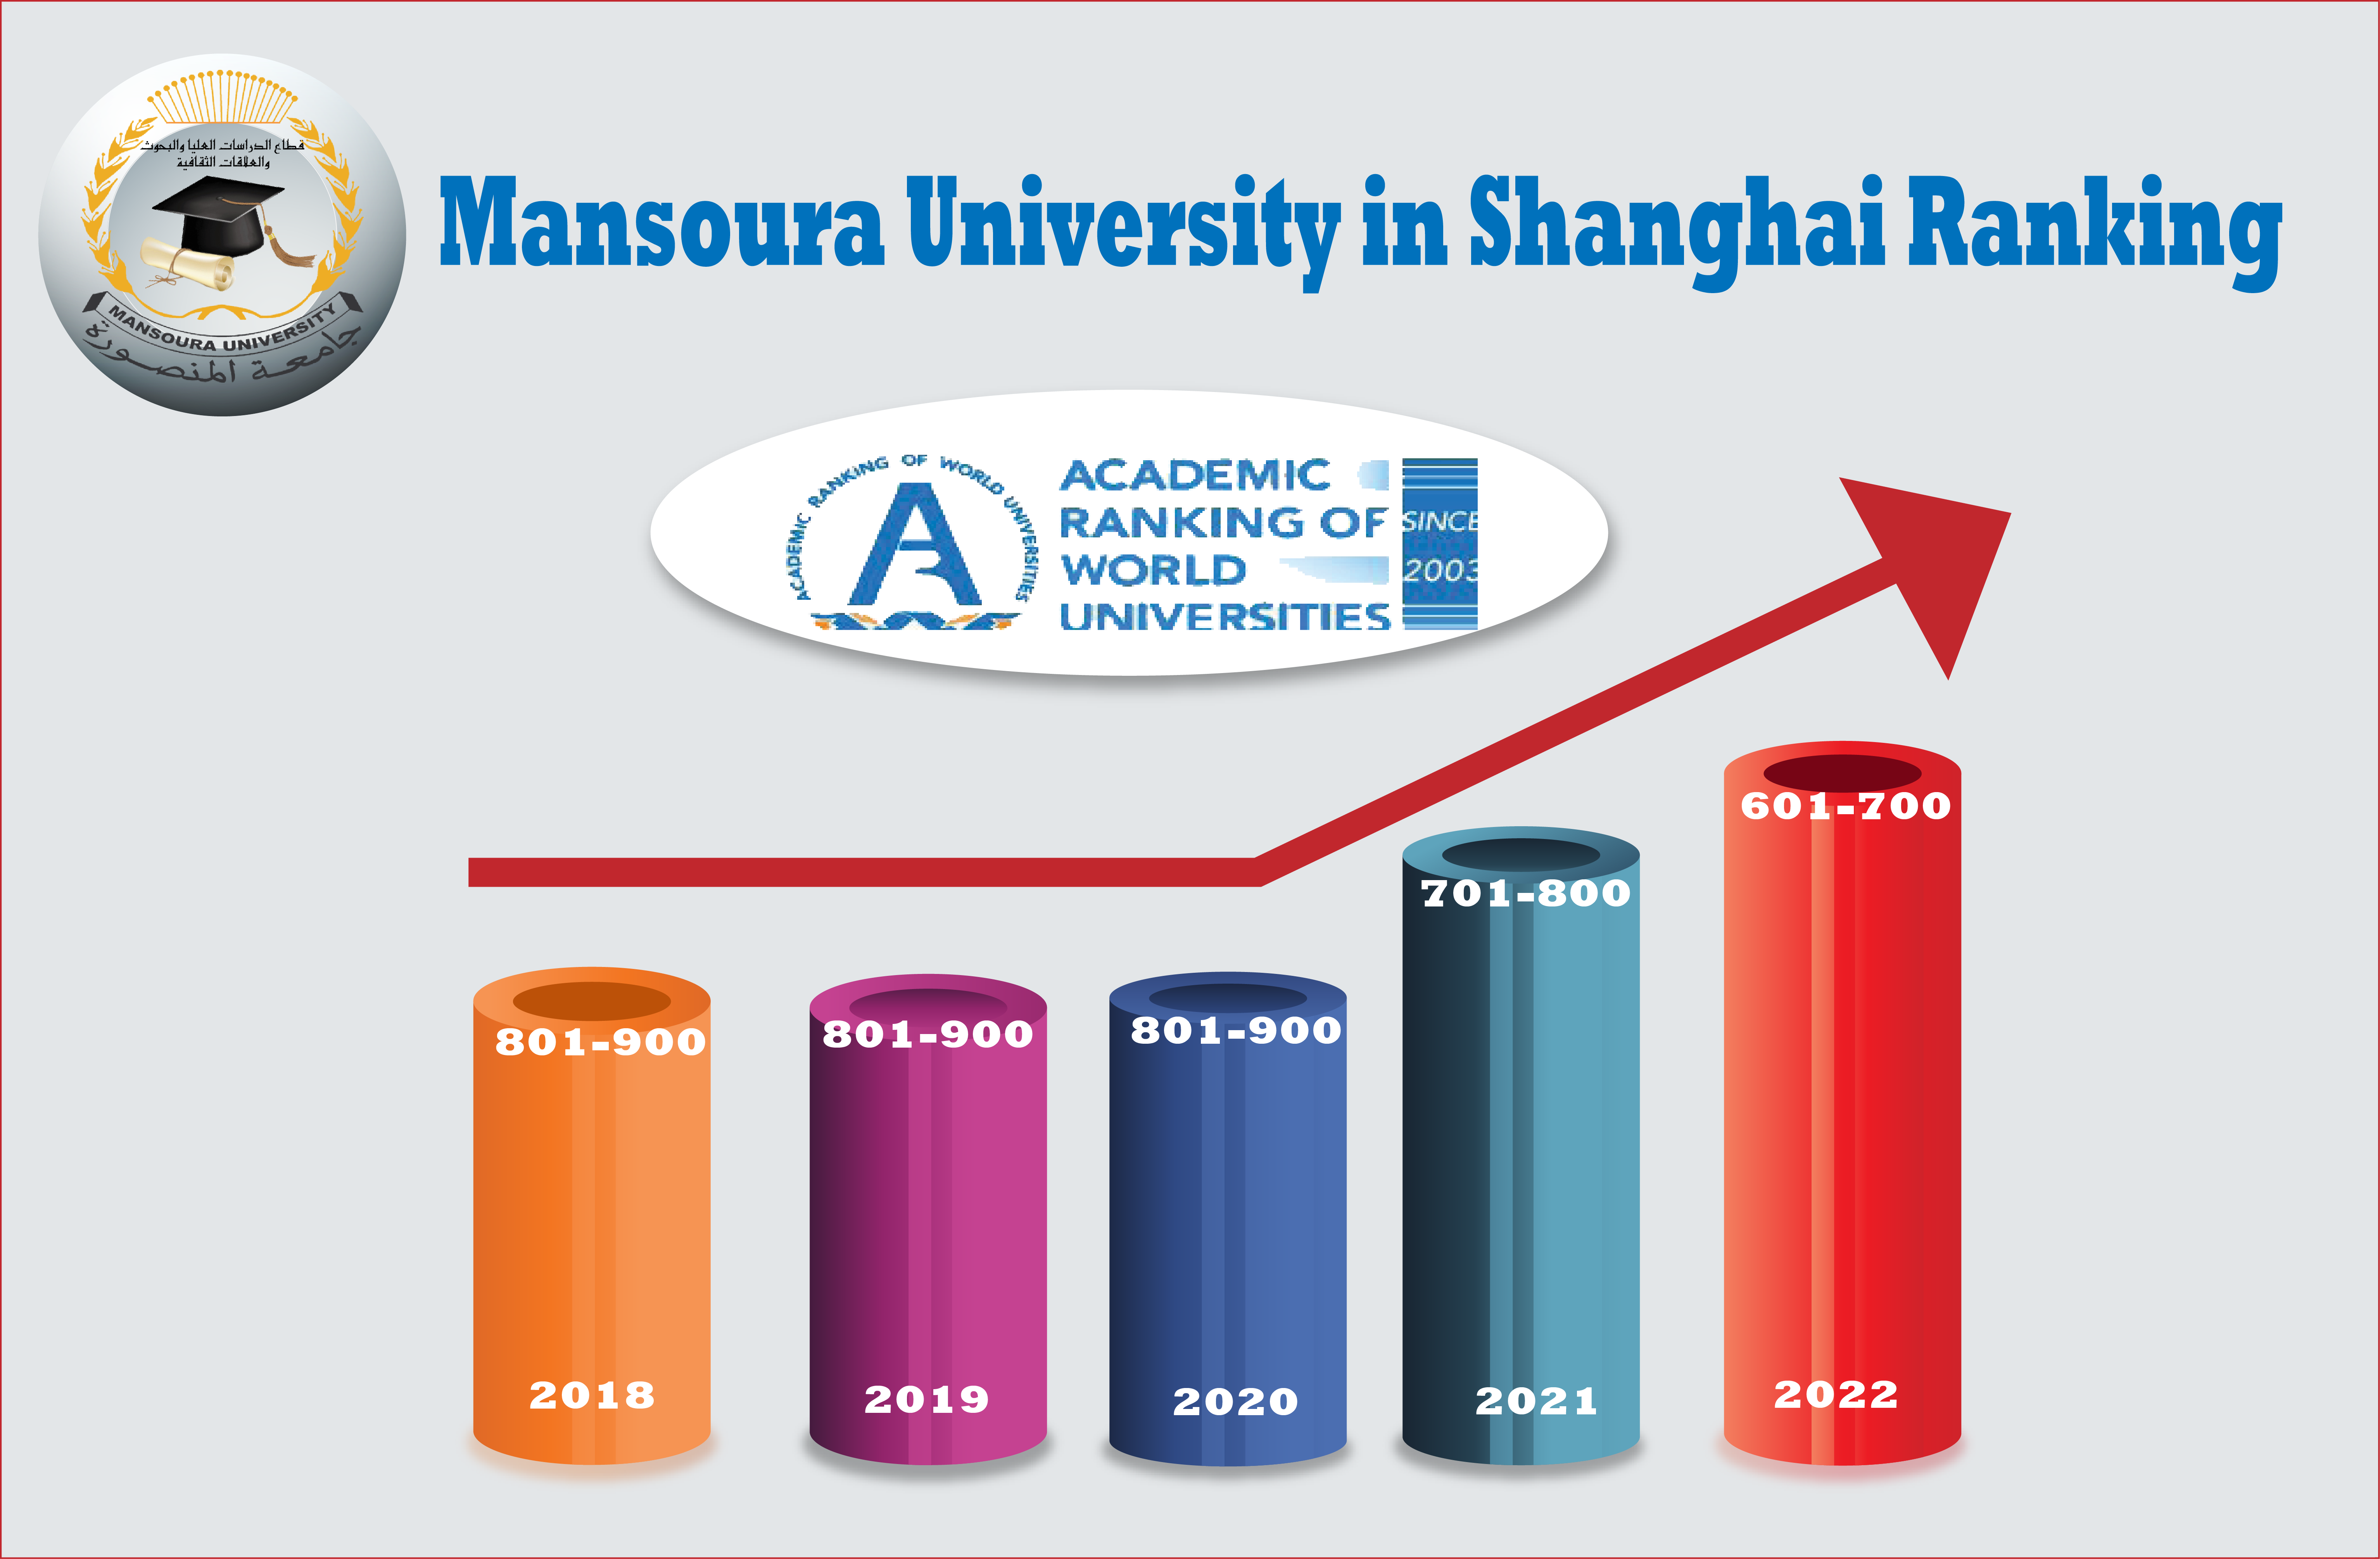 "Shanghai Global Ranking of Academic Subjects 2022"